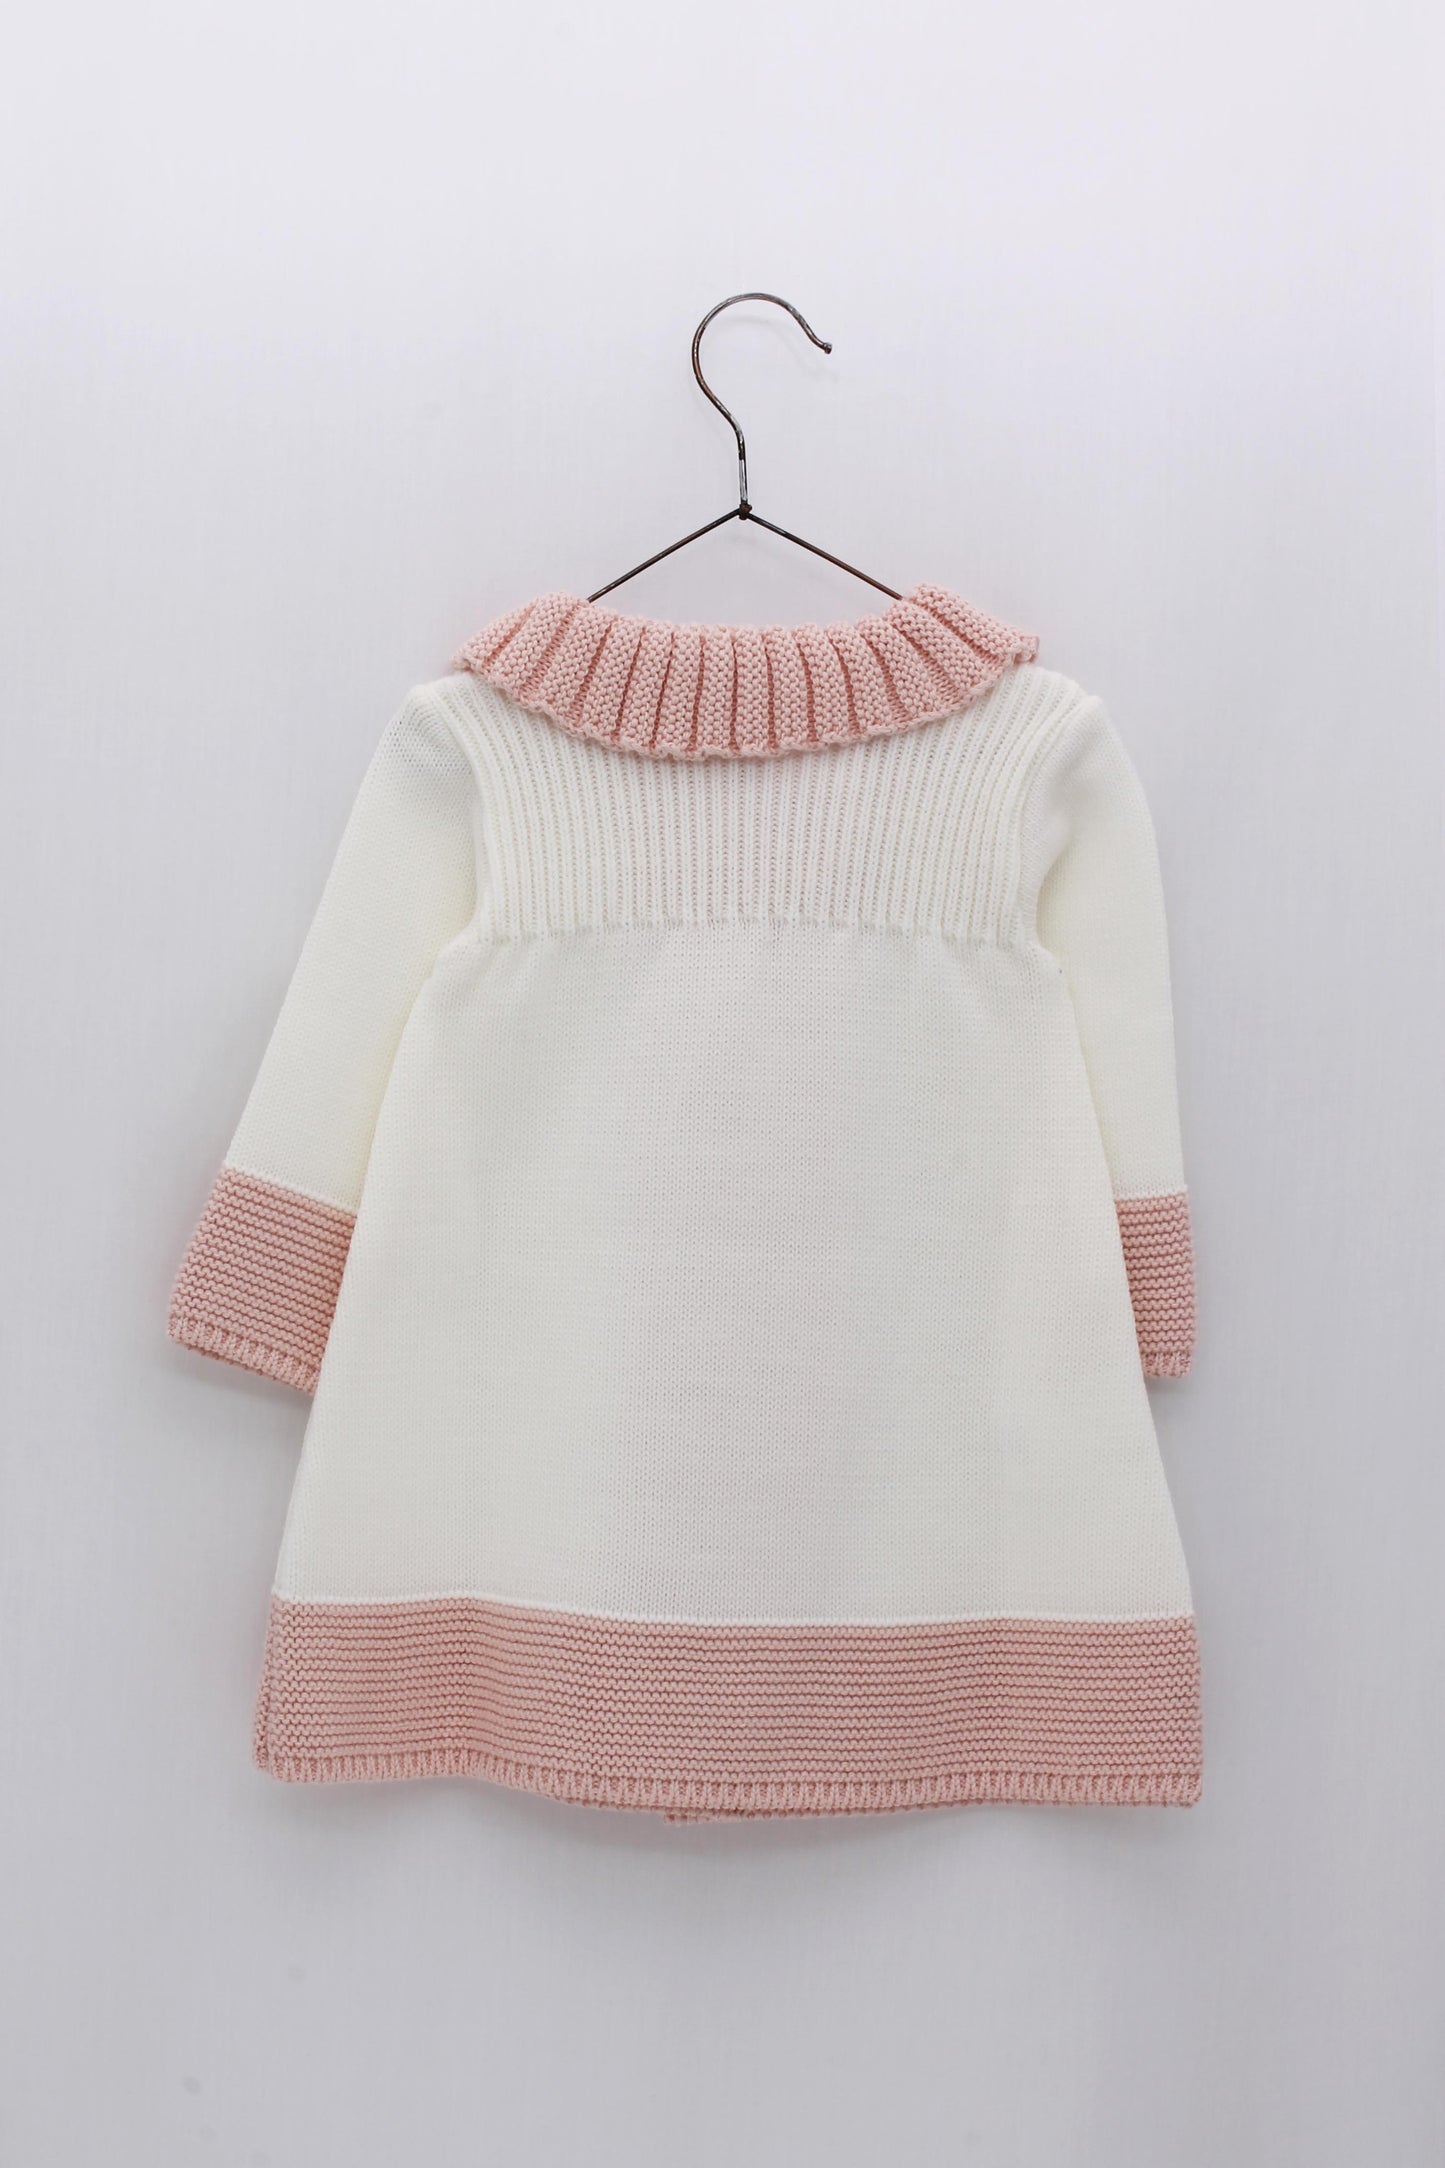 FOQUE Baby Girls Cream & Pink Knitted Dress -1151